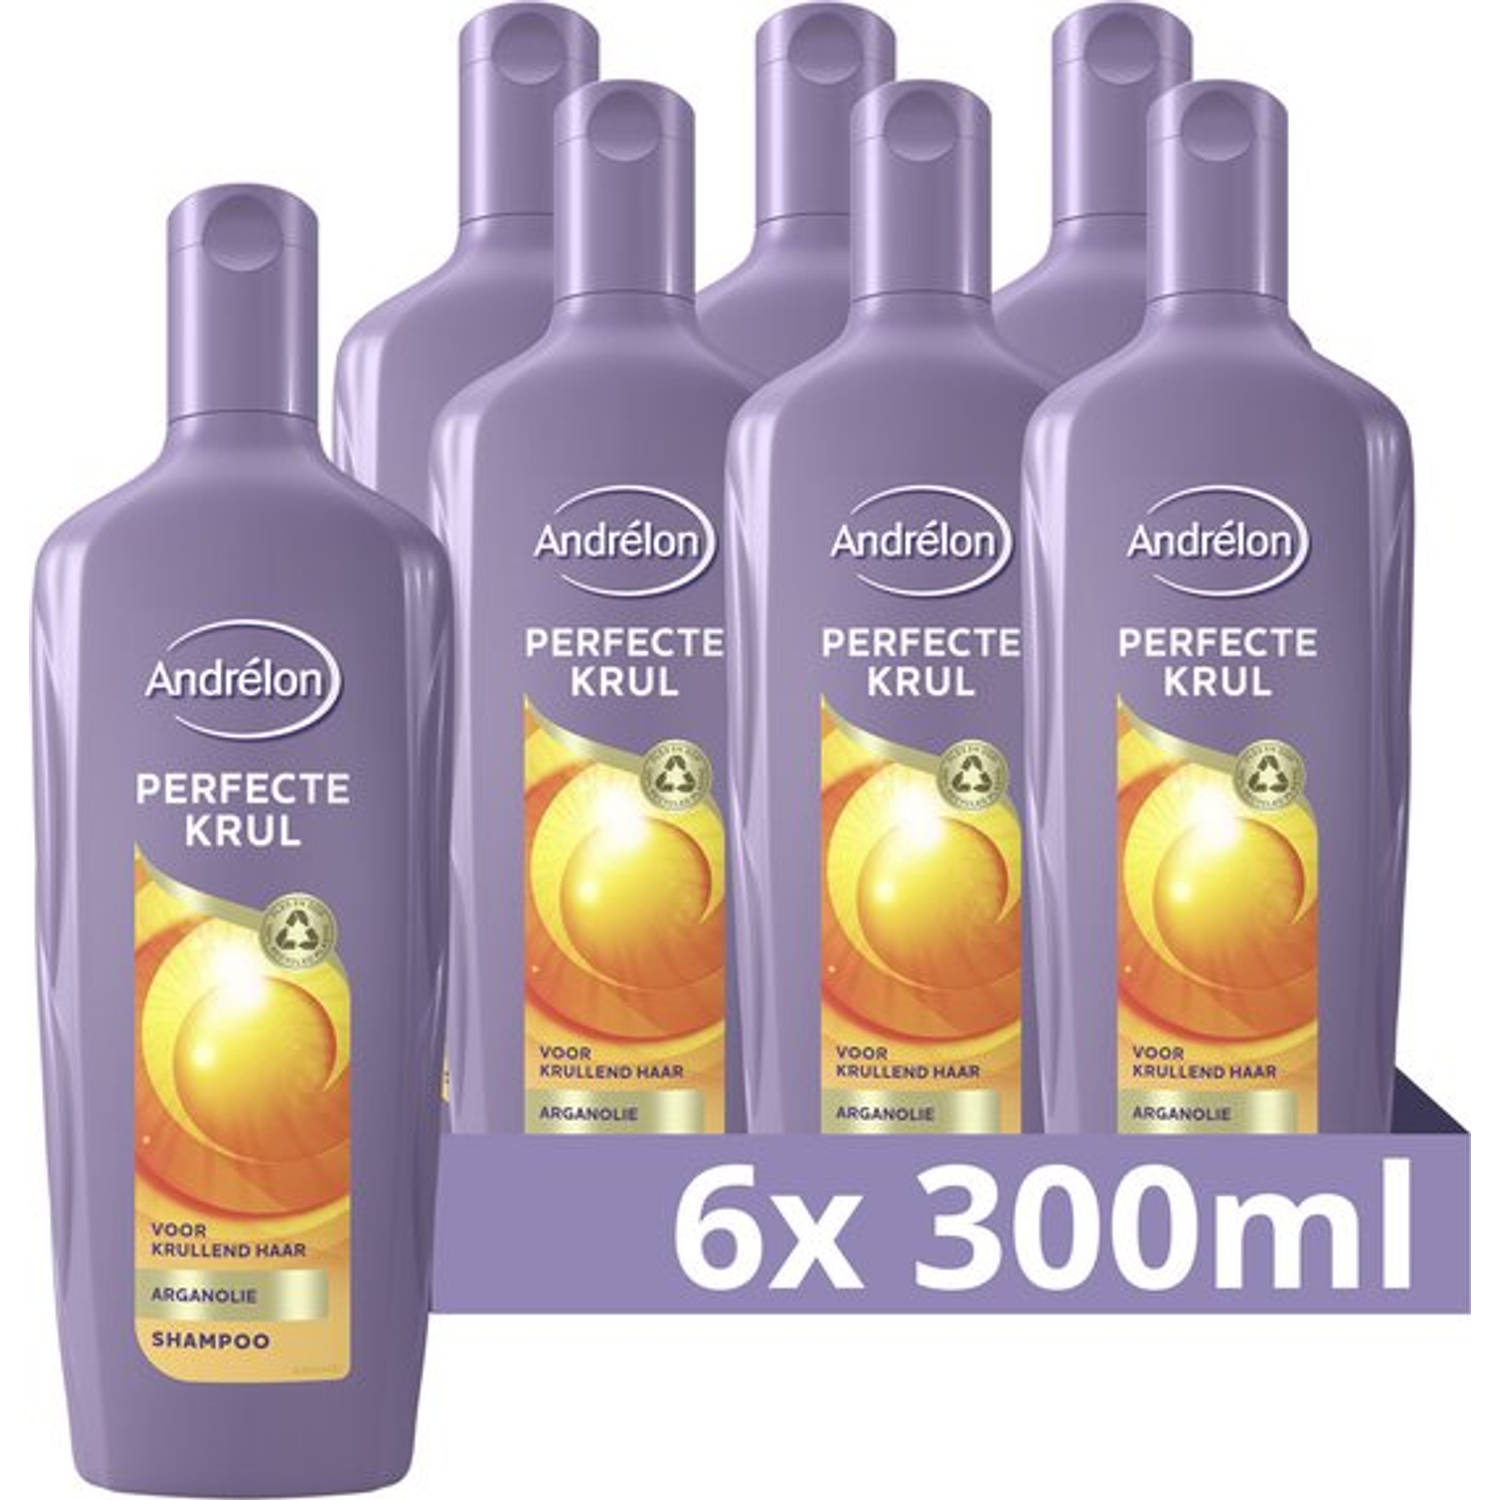 Andrelon Classic Perfecte Krul shampoo 6x300 ml